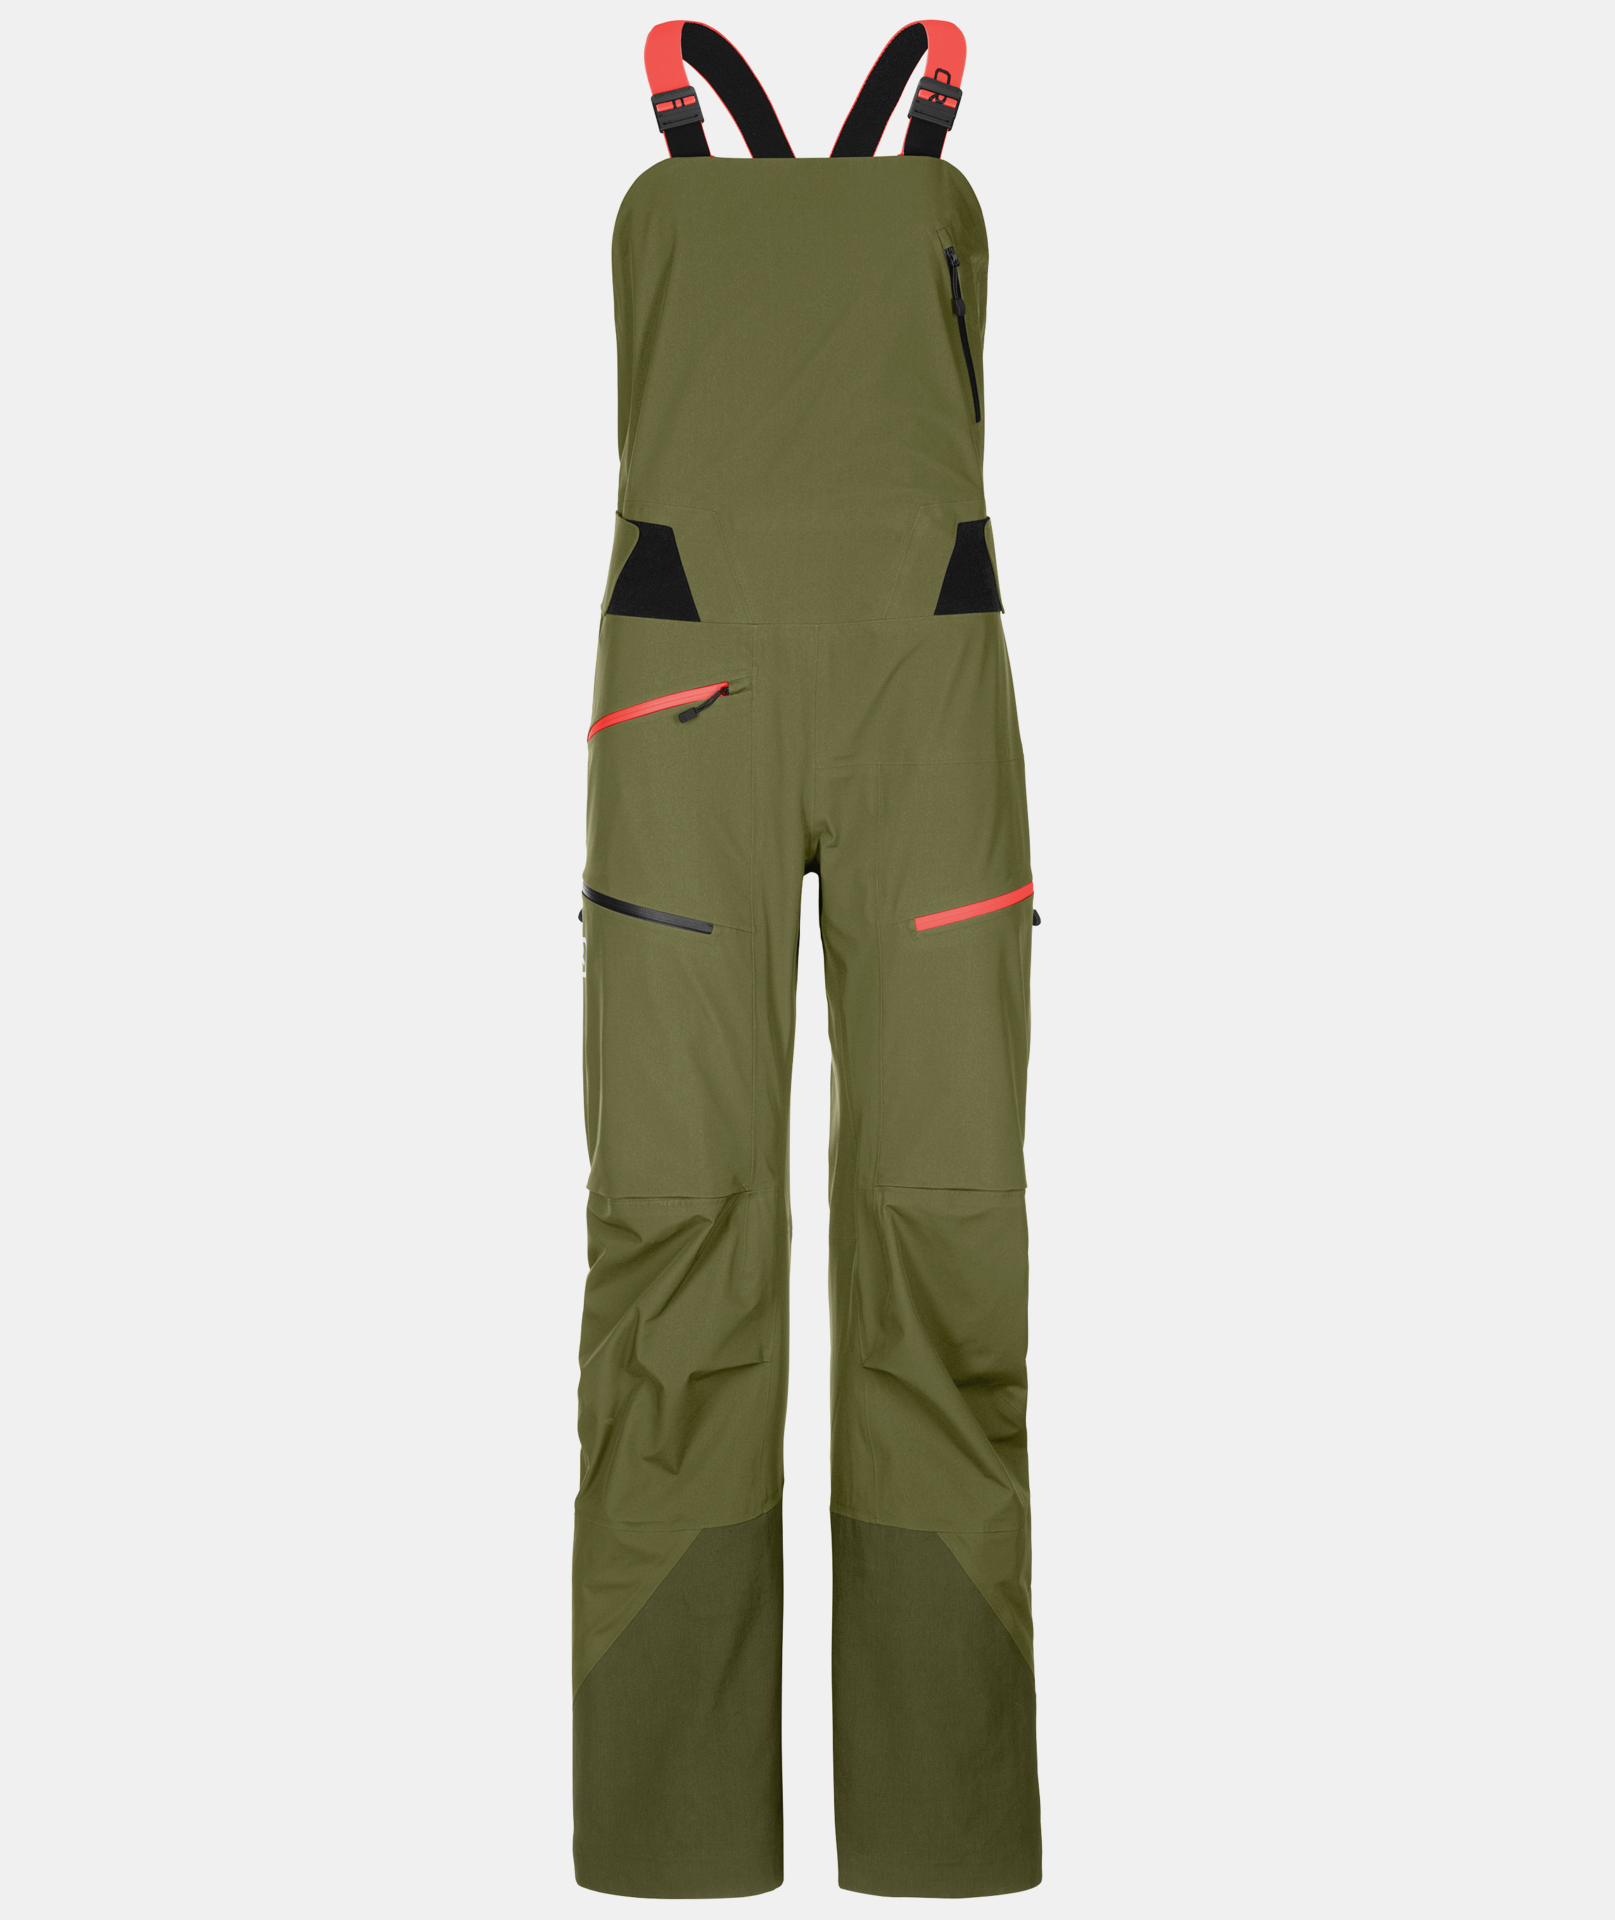 XS-XL Snow Pants & Ski Bibs, Regular and Short Lengths